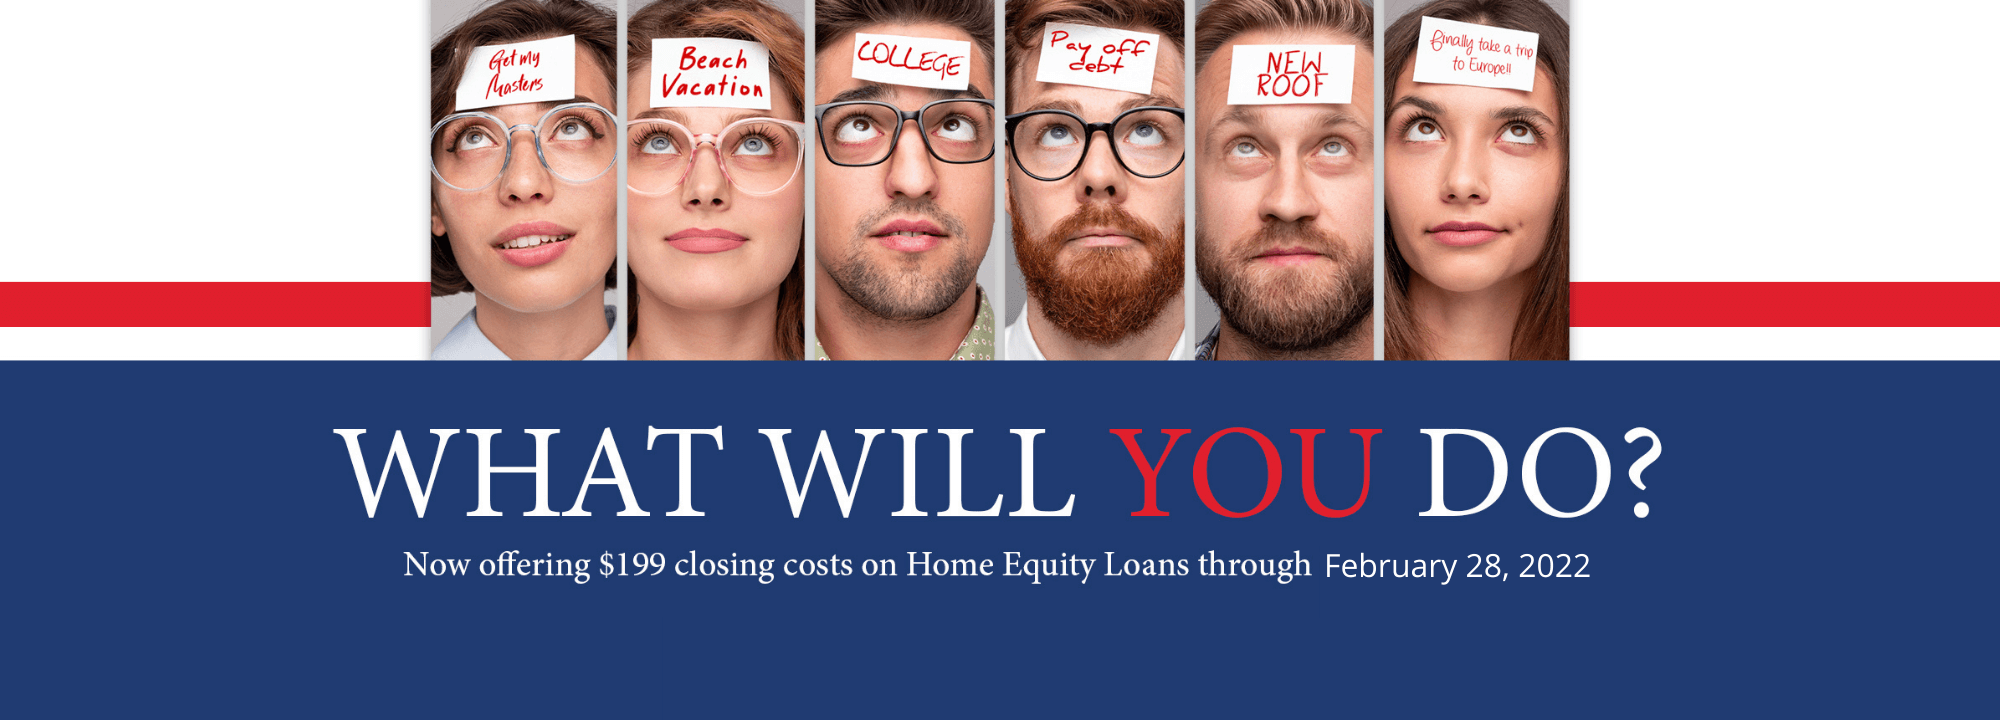 Home Equity Loan Promo